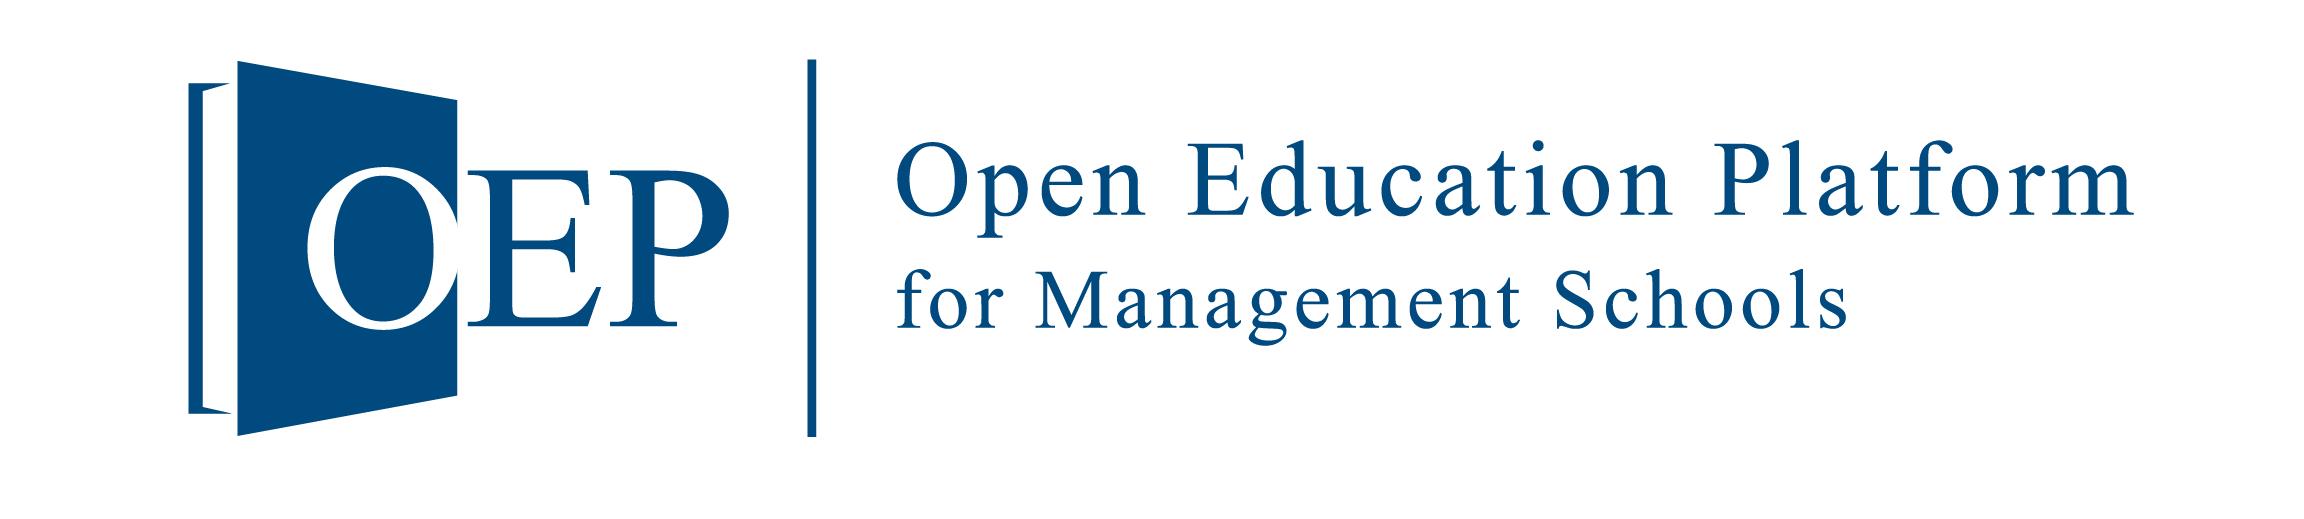 Open Education Platform